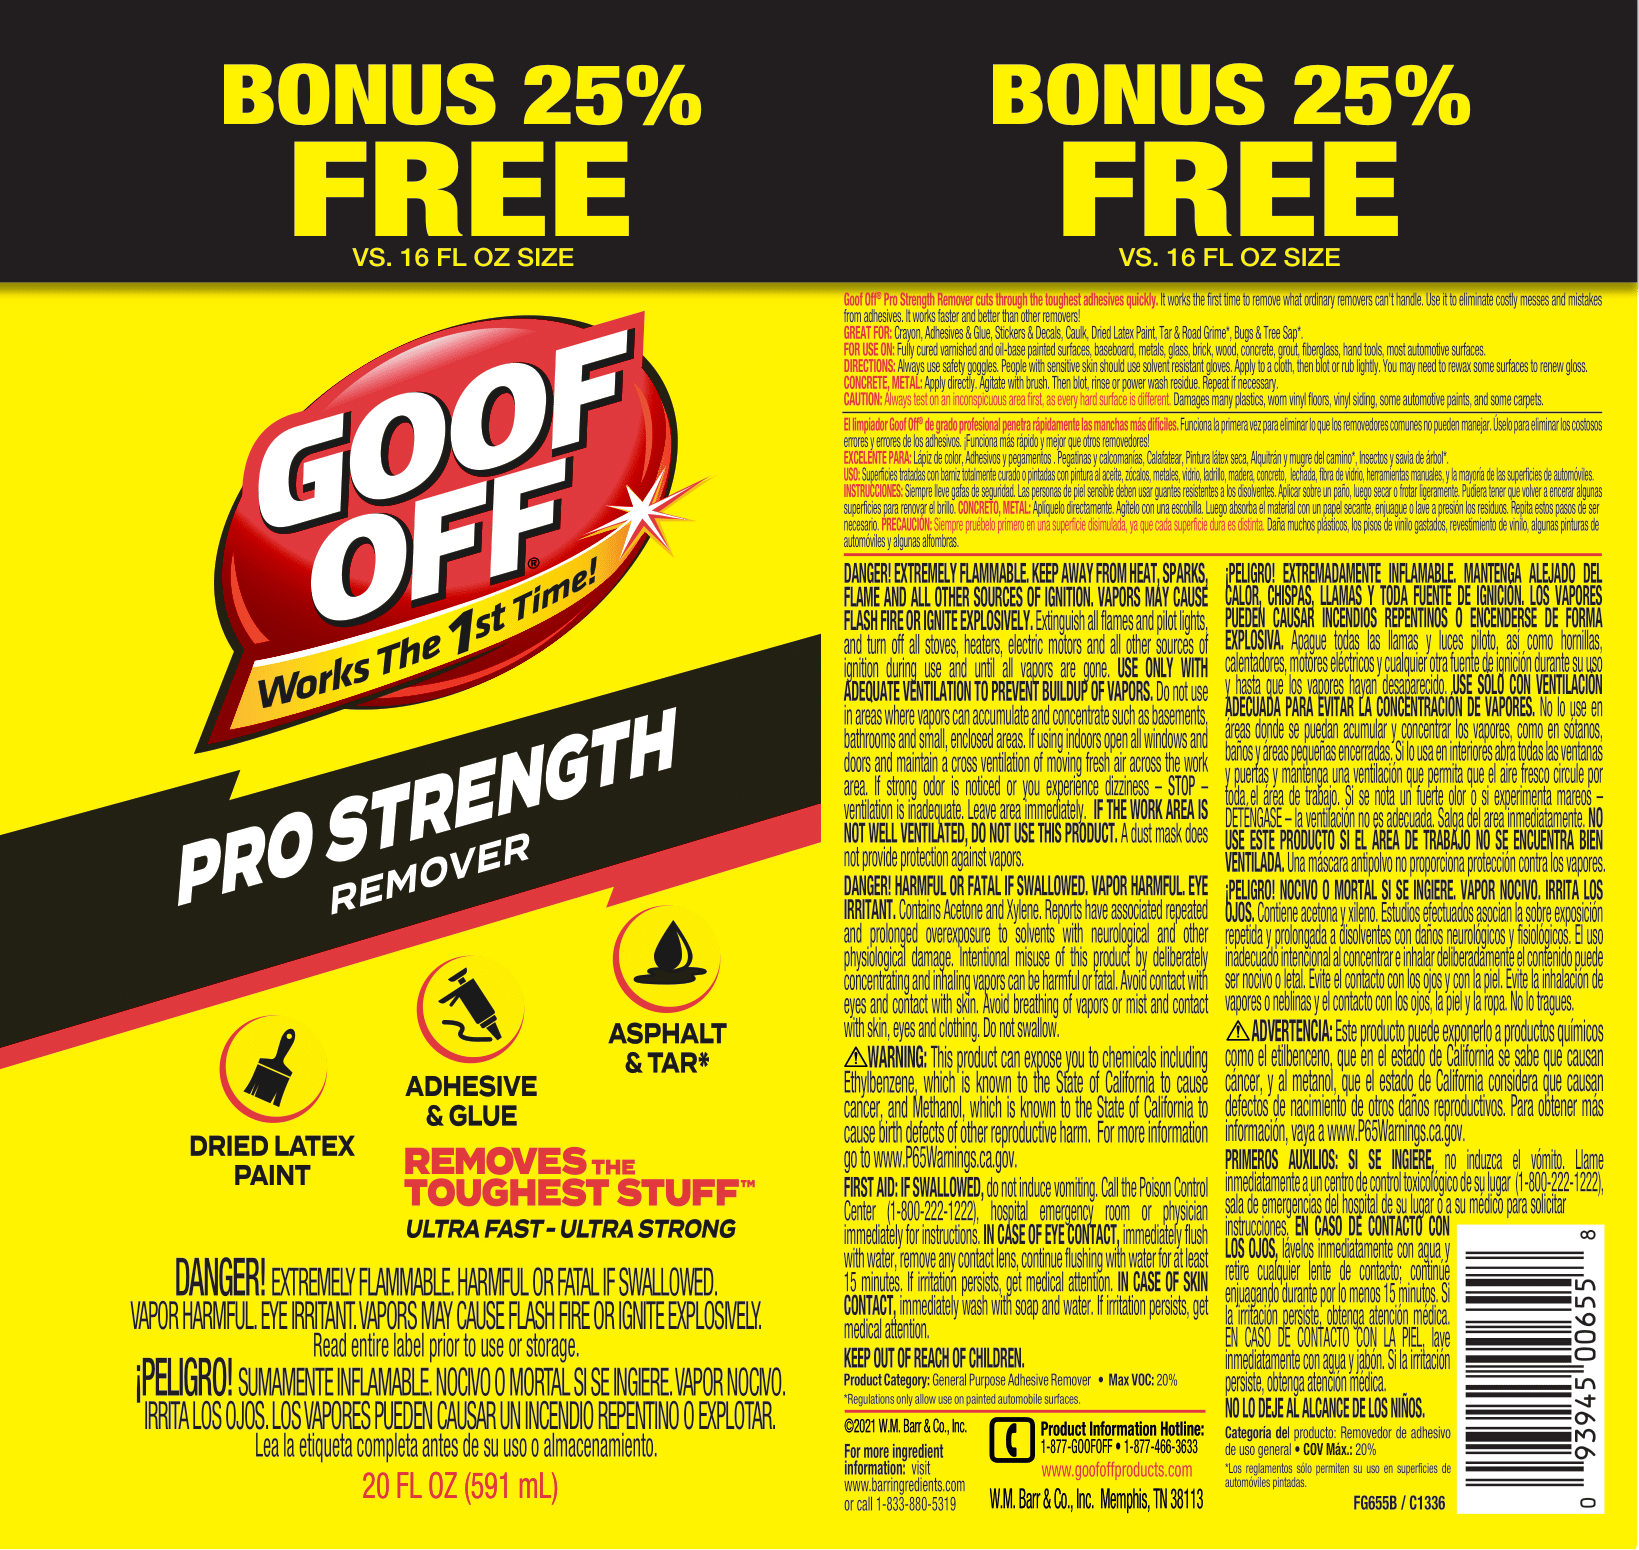 Goof Off Pro Strength Remover Bonus 25% Free